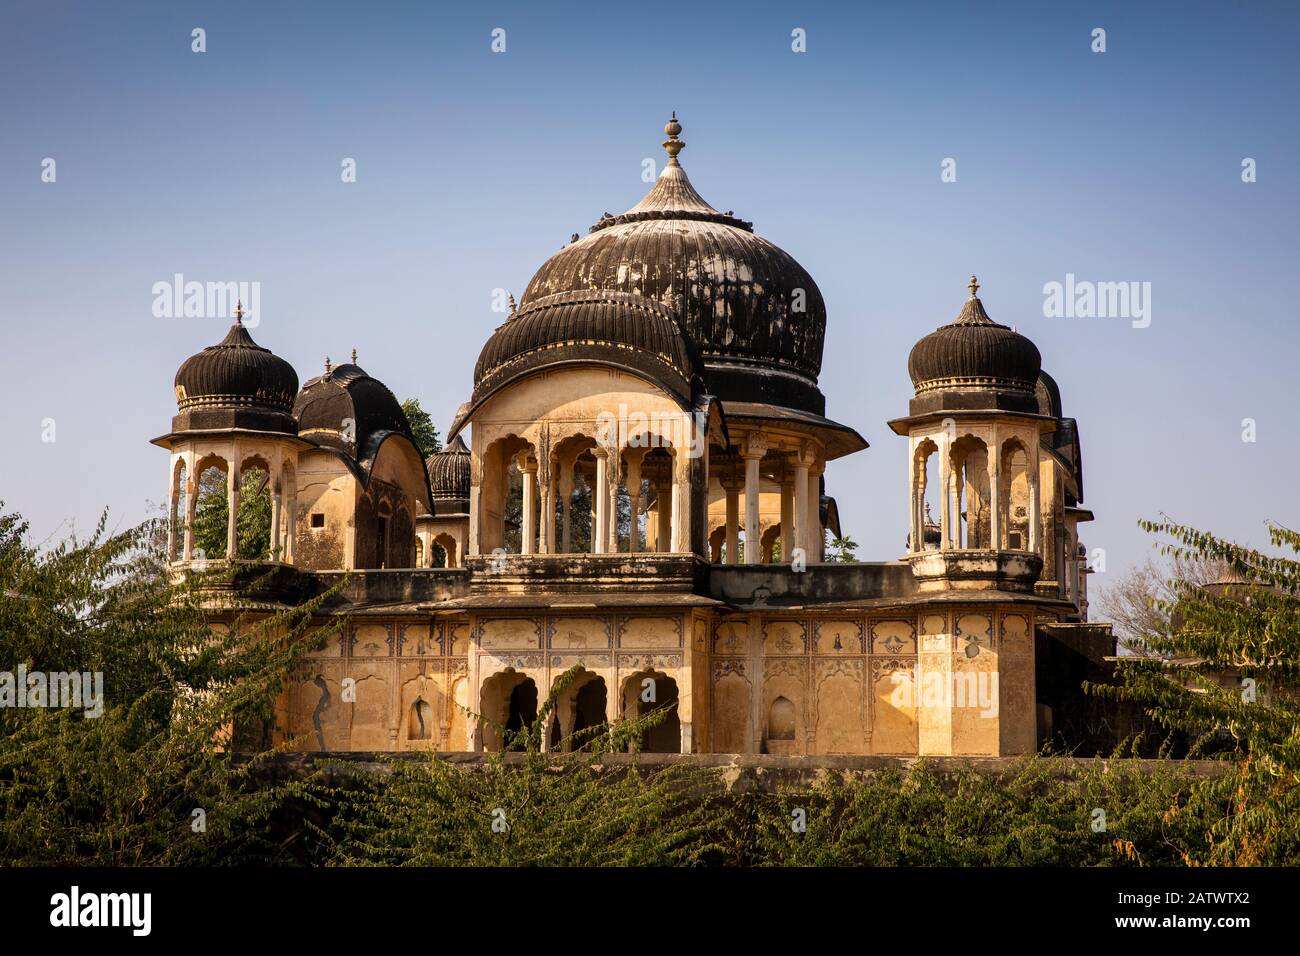 India, Rajasthan, Shekhawati, Dundlod, Chhatri memorial cenotaph at southern edge of town Stock Photo